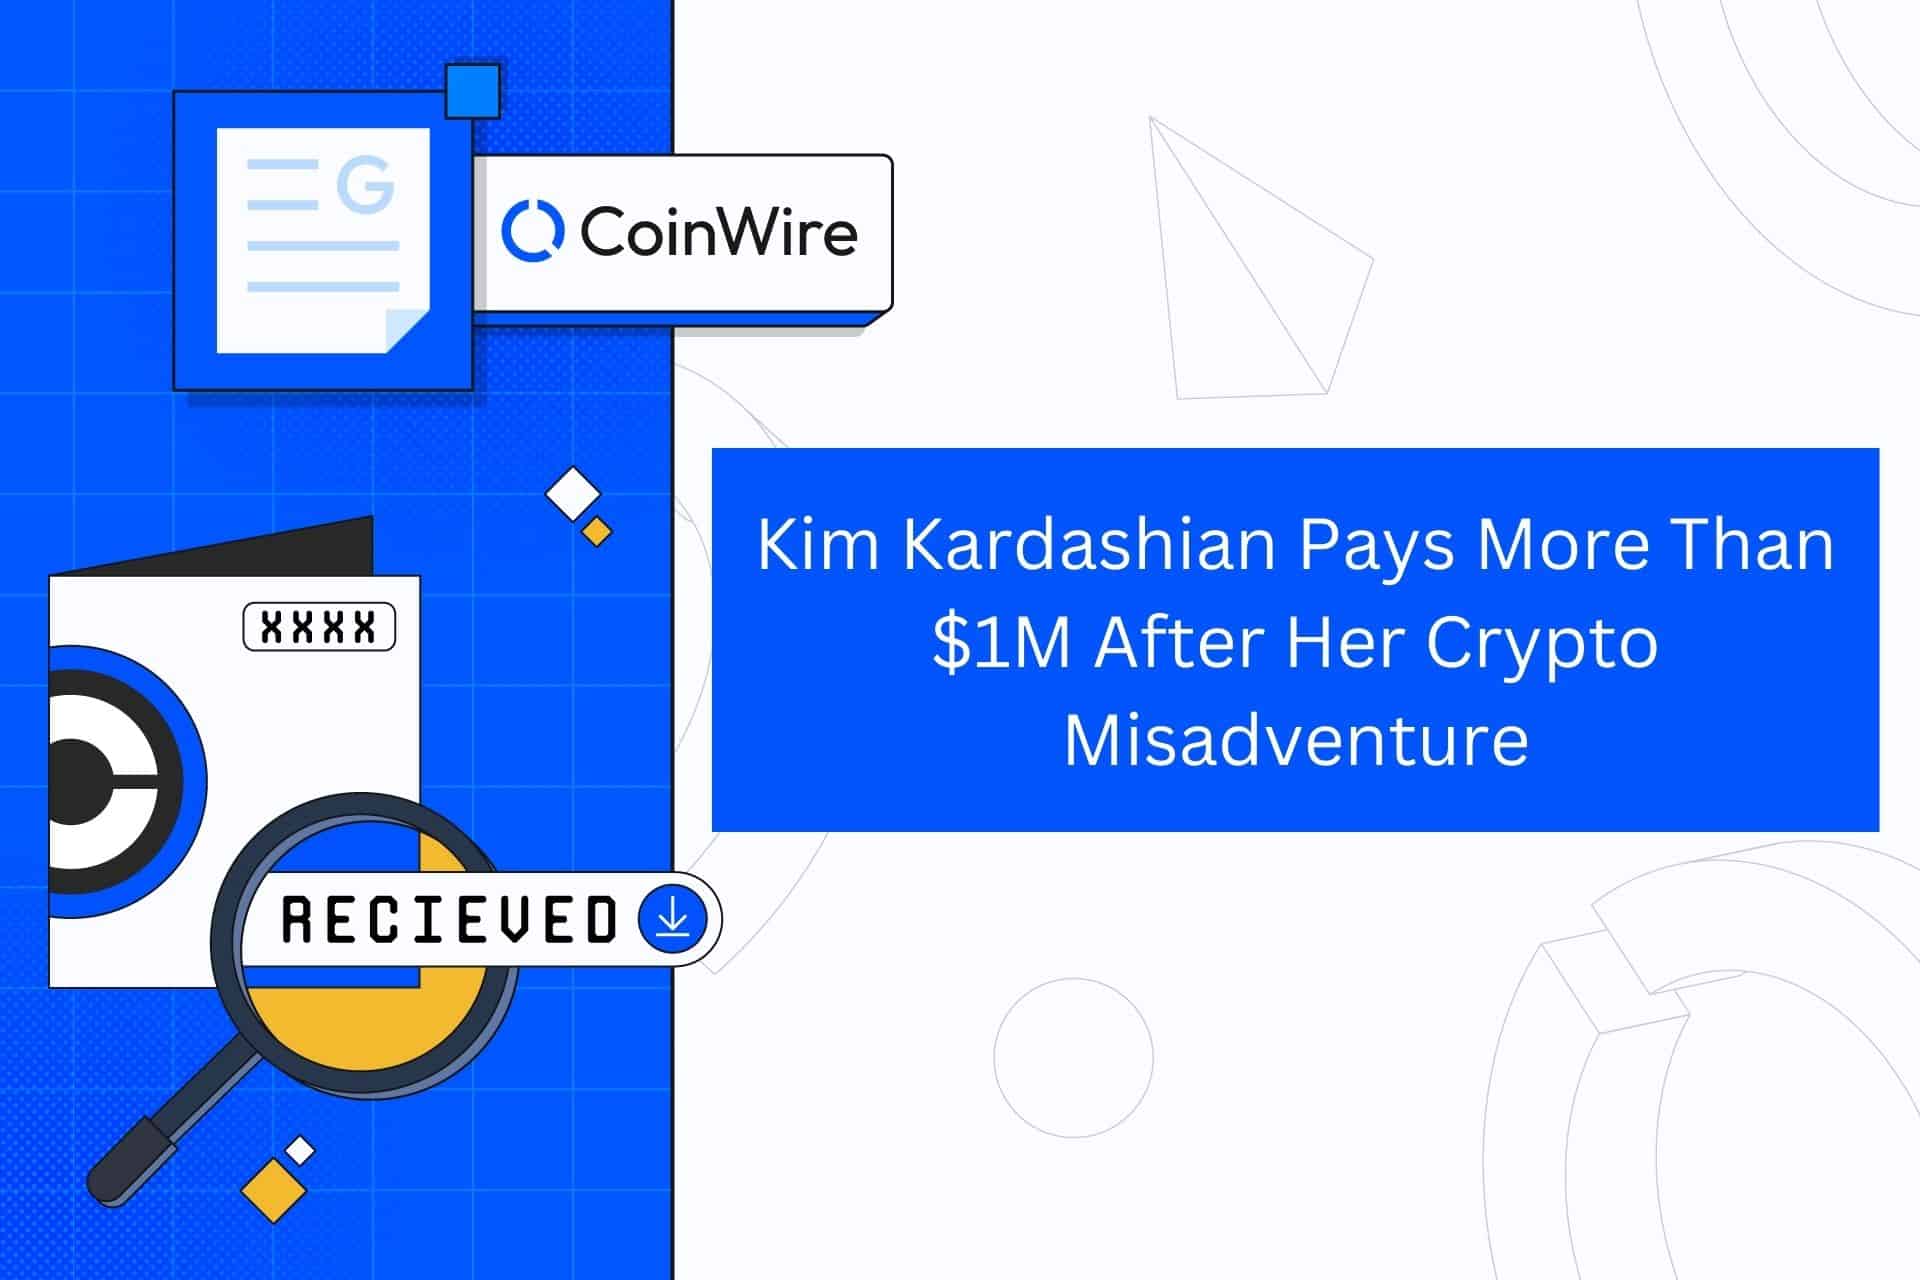 Kim Kardashian Pays More Than $1M After Her Crypto Misadventure